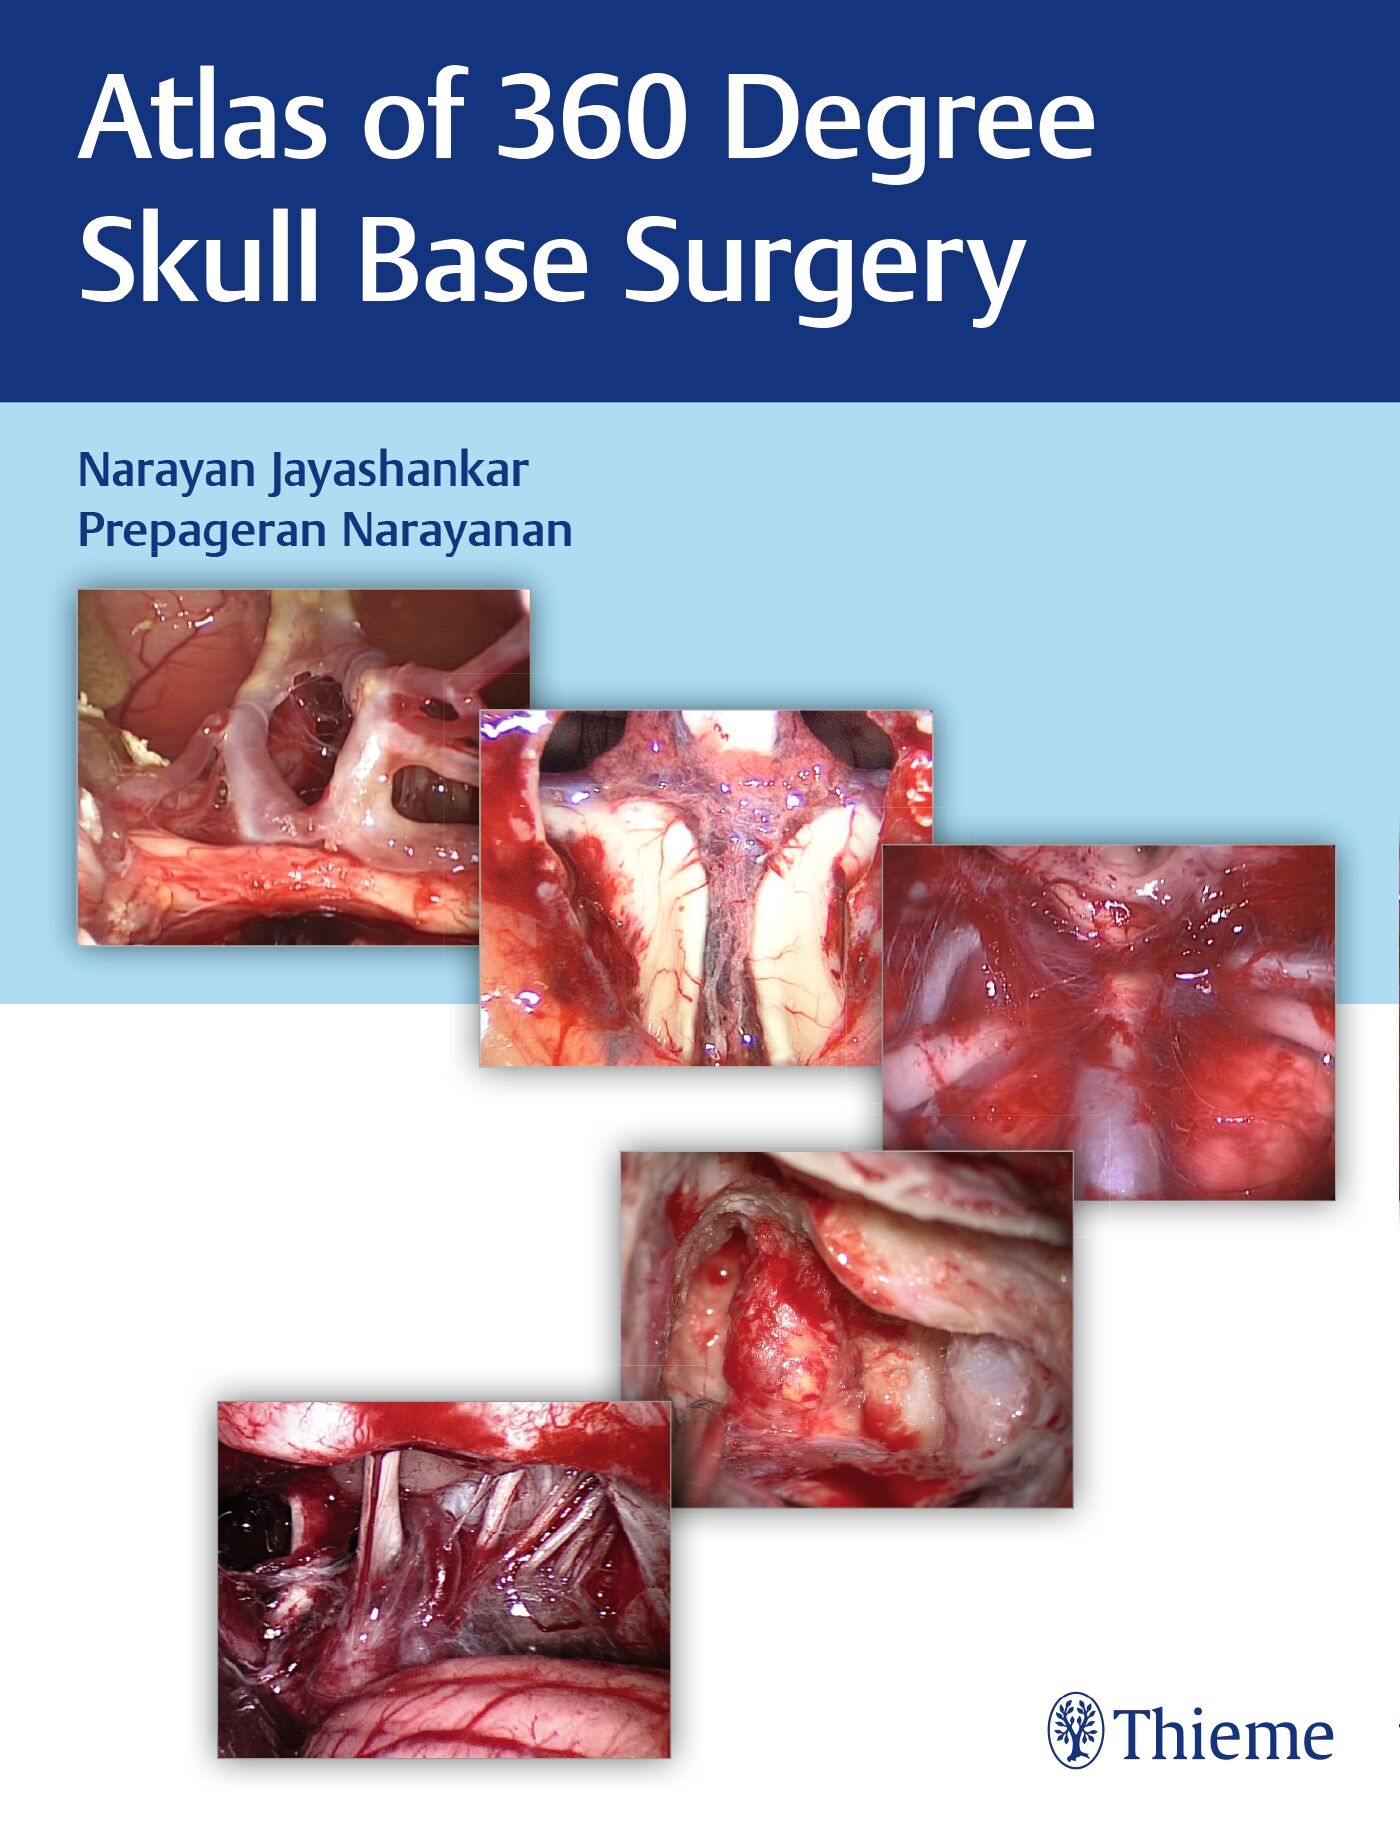 Atlas of 360 Degree Skull Base Surgery, 9789390553136